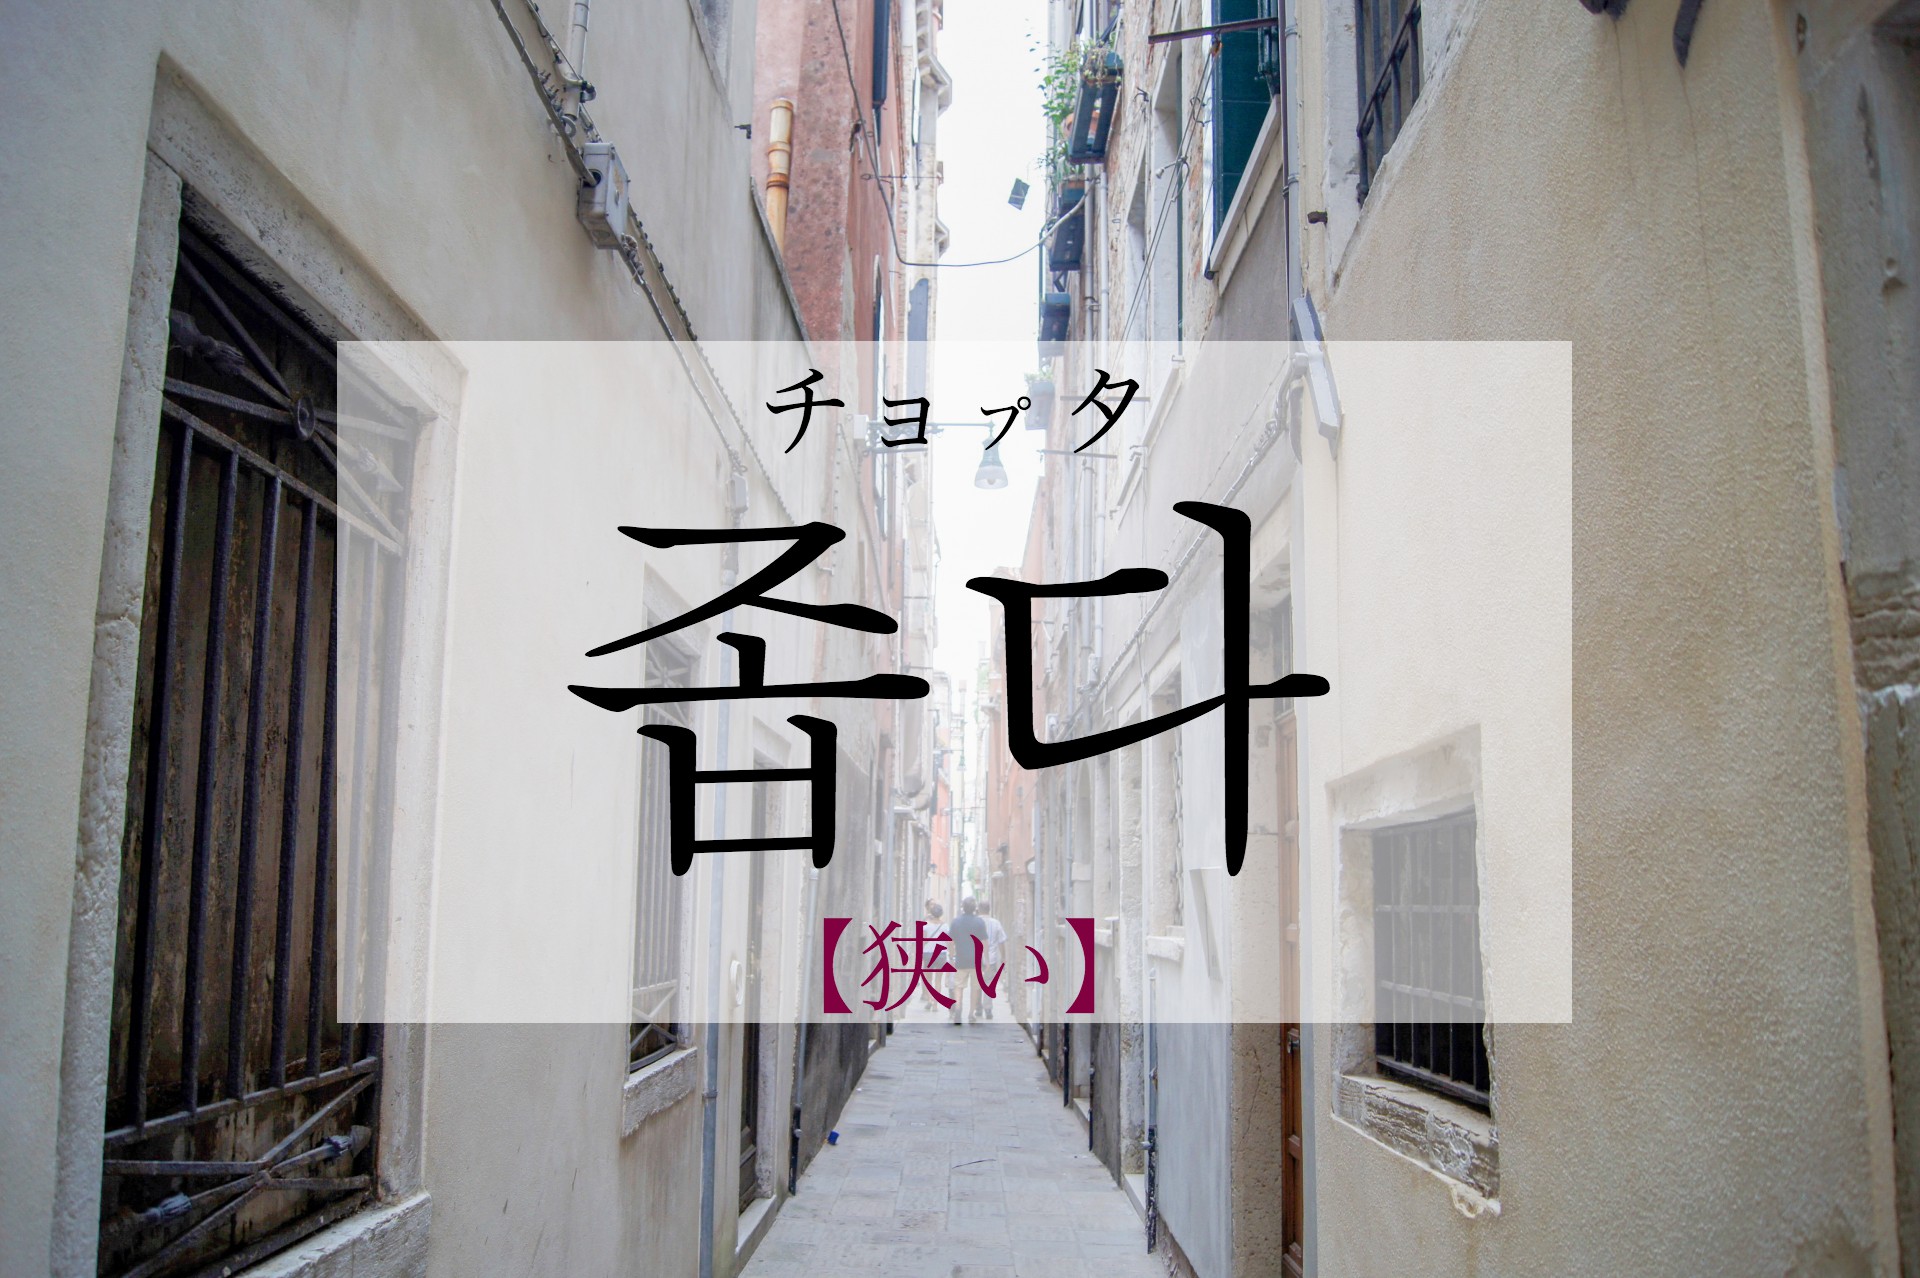 koreanword-narrow